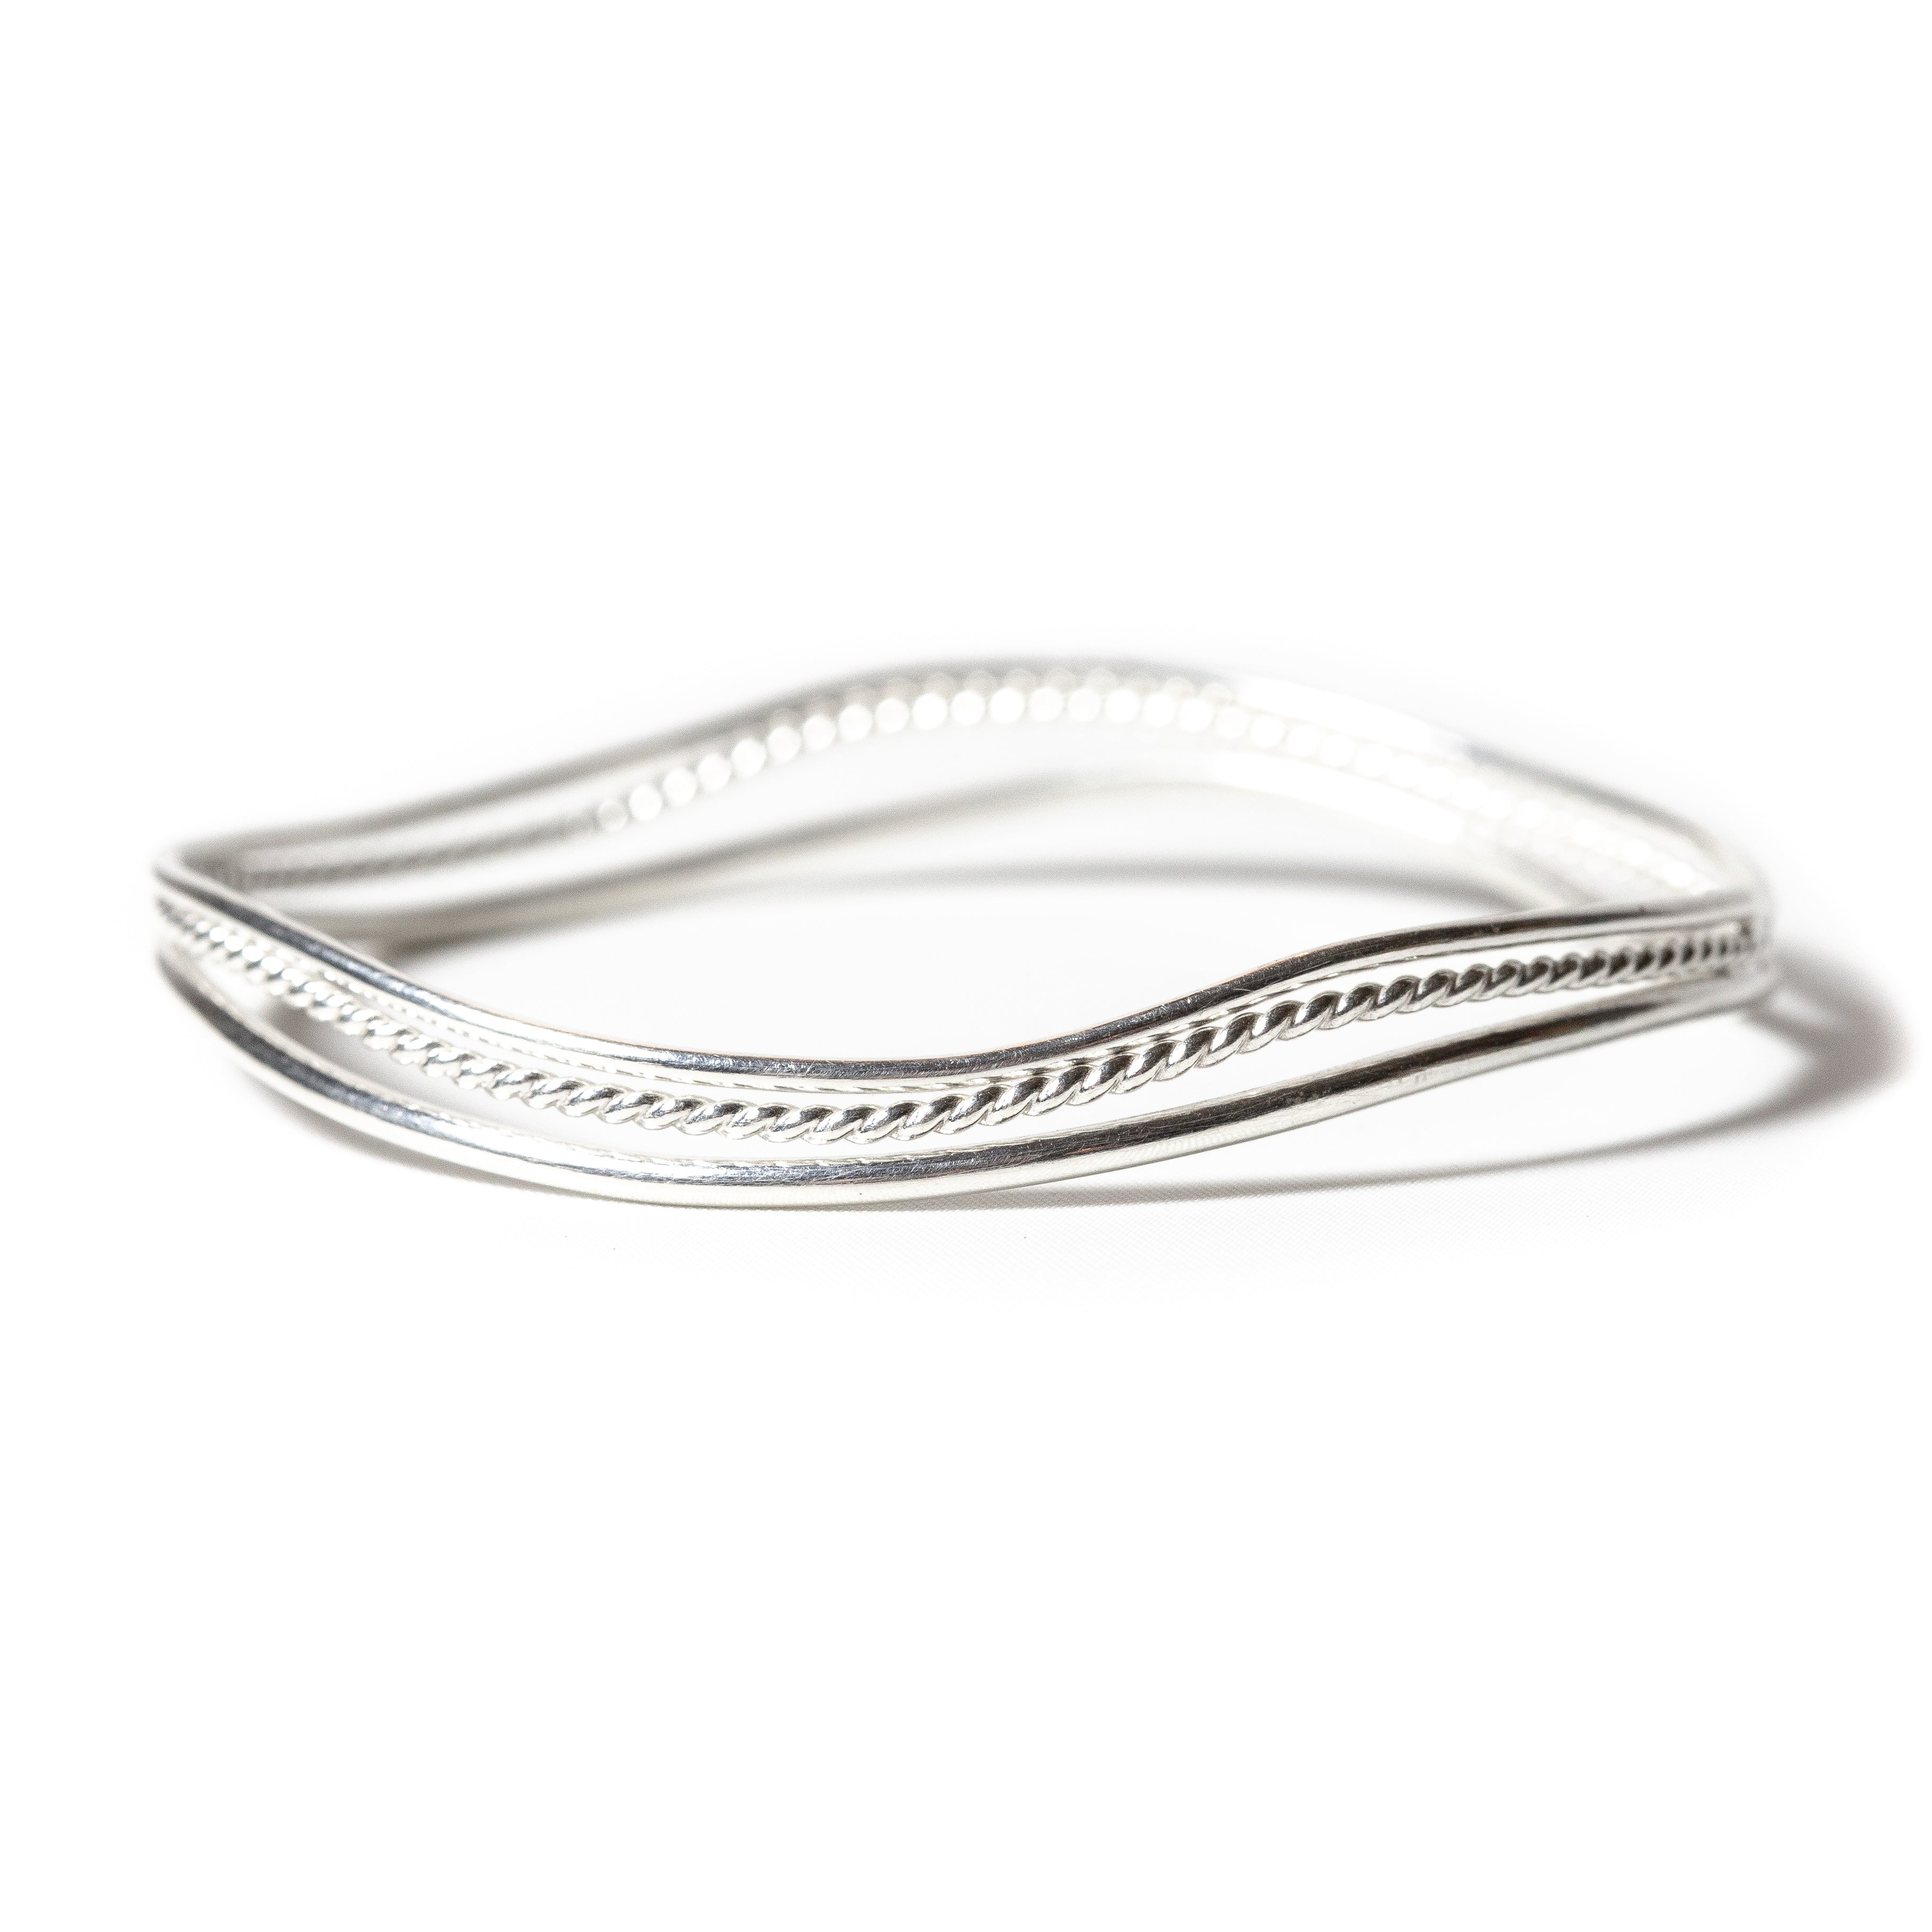 sterling silver bracelet handmade in tofino bc